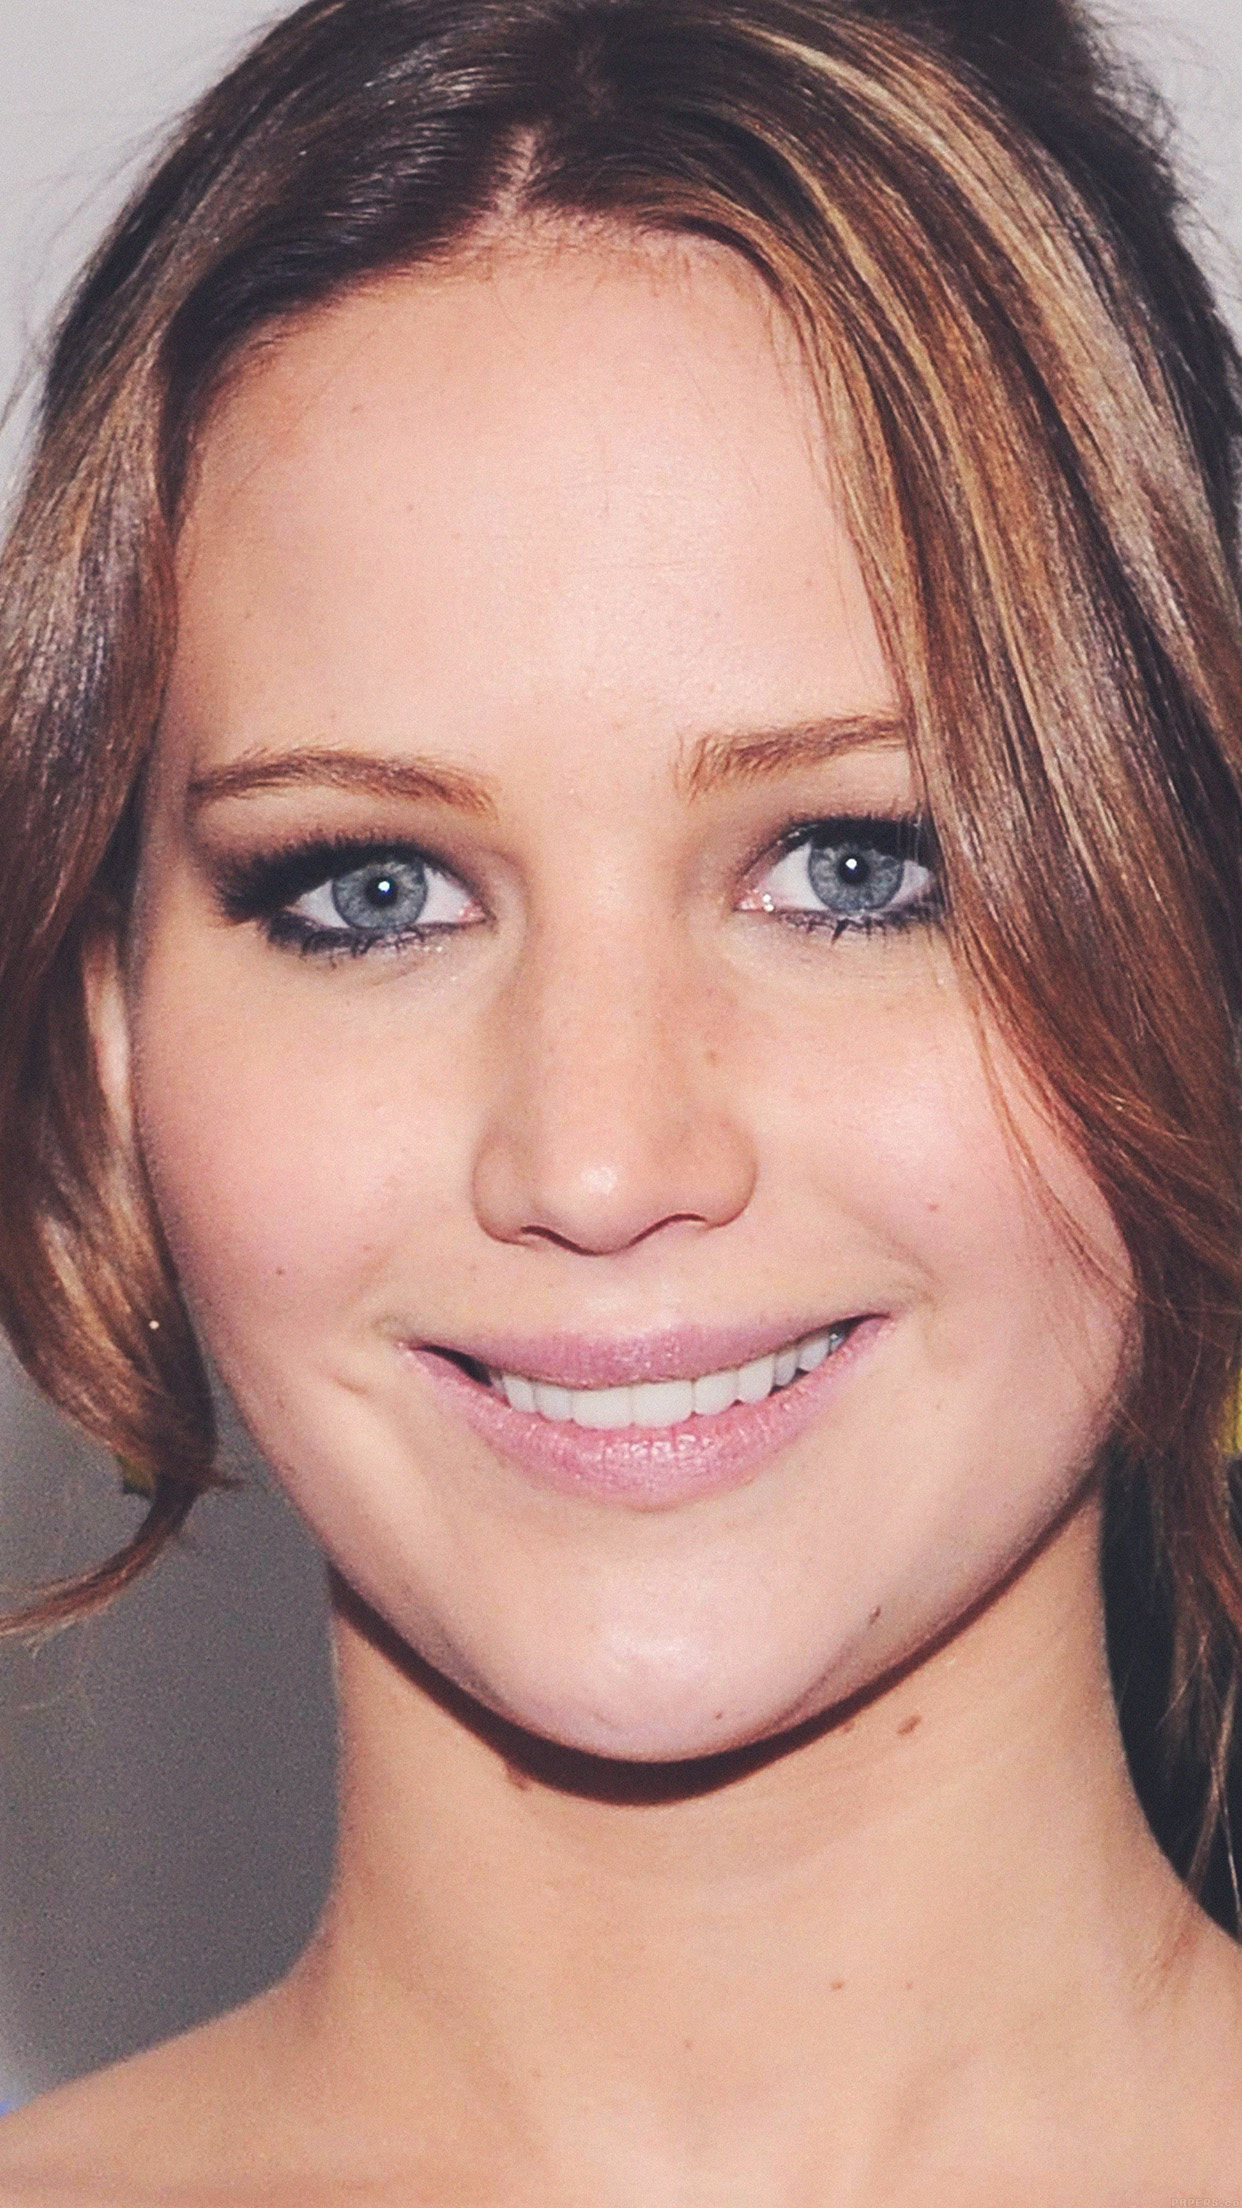 Jennifer Lawrence Smile Celebrity Face Android wallpaper